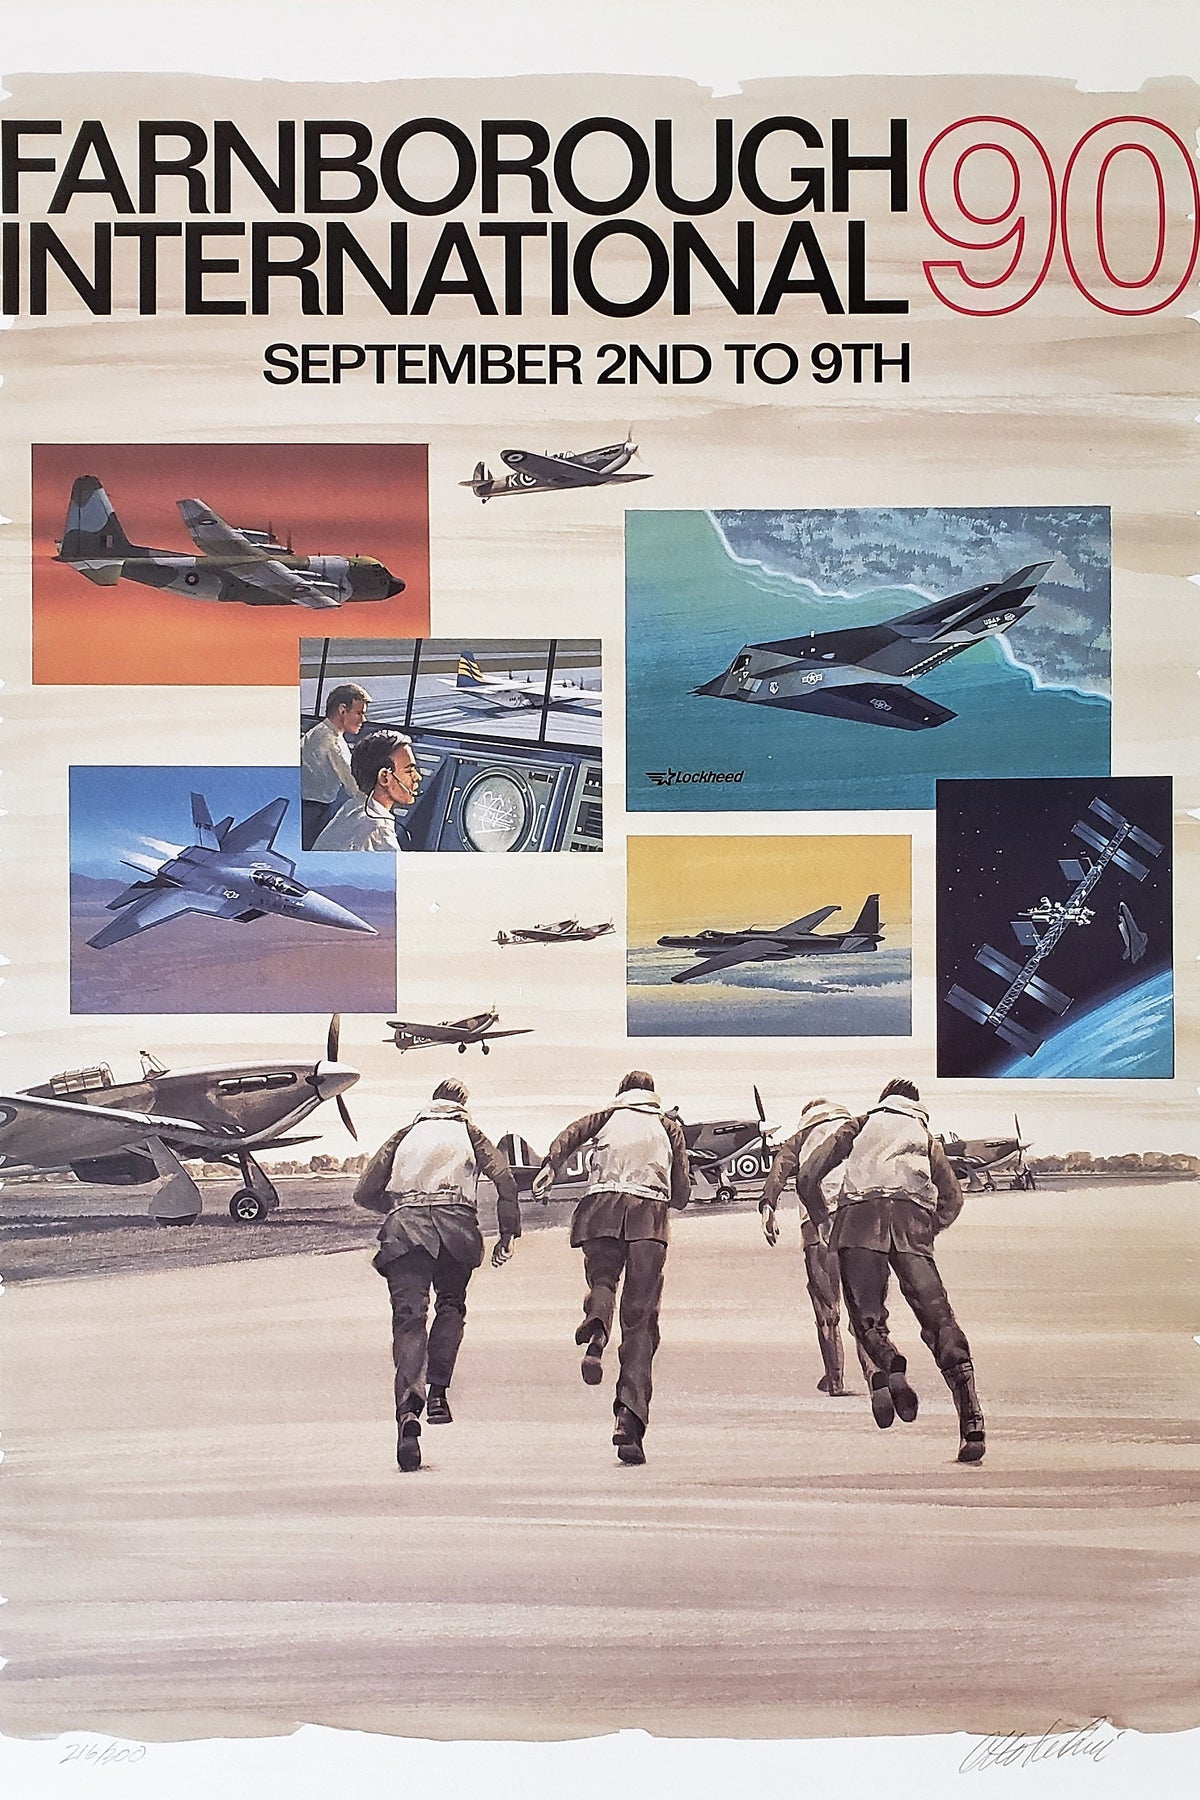 Farnborough Airshow - Authentic Vintage Poster